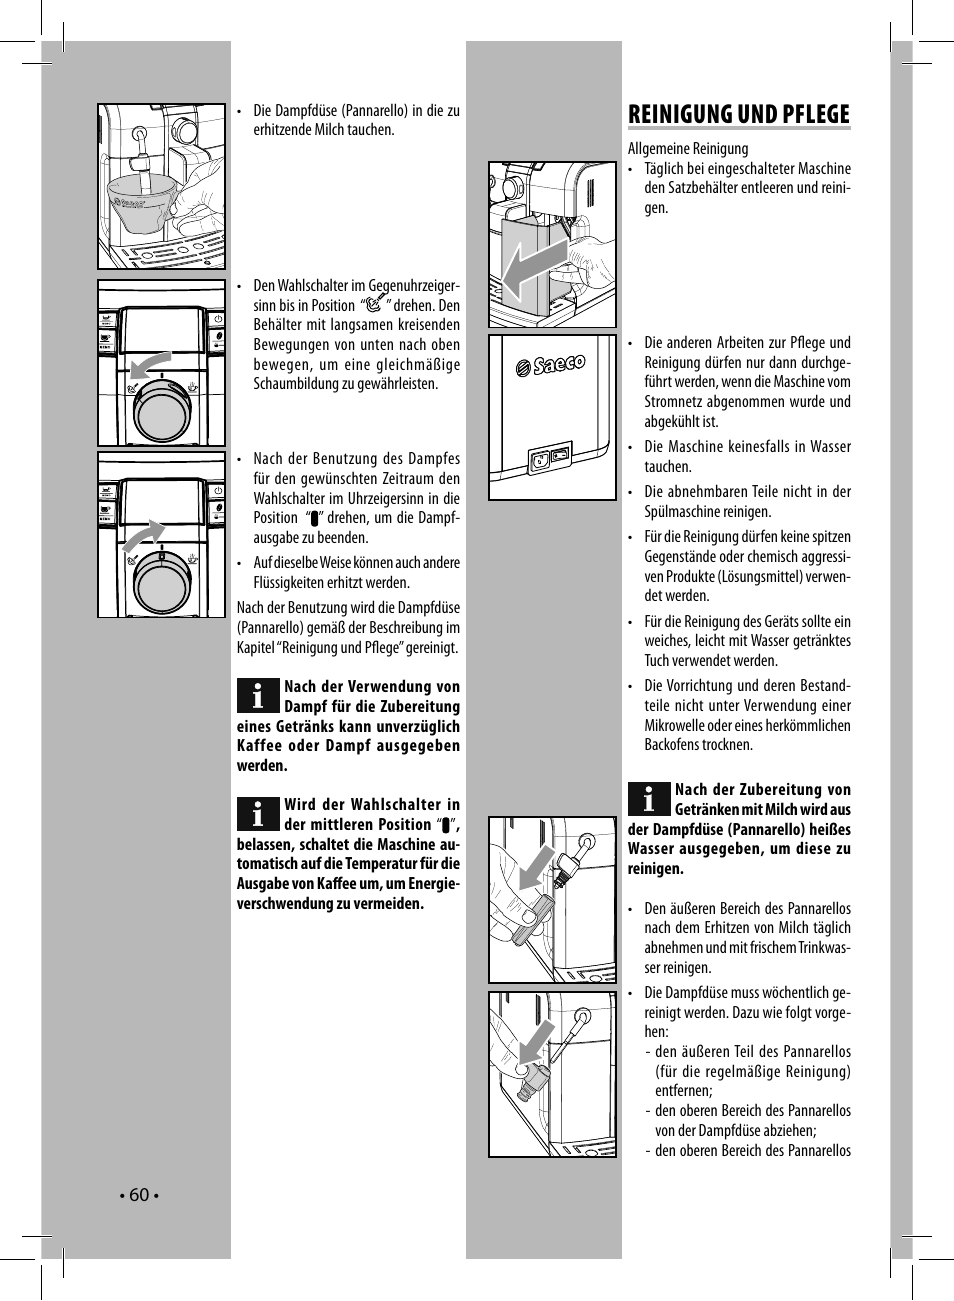 Reinigung und pflege | Philips Saeco Syntia Kaffeevollautomat User Manual |  Page 60 / 96 | Original mode